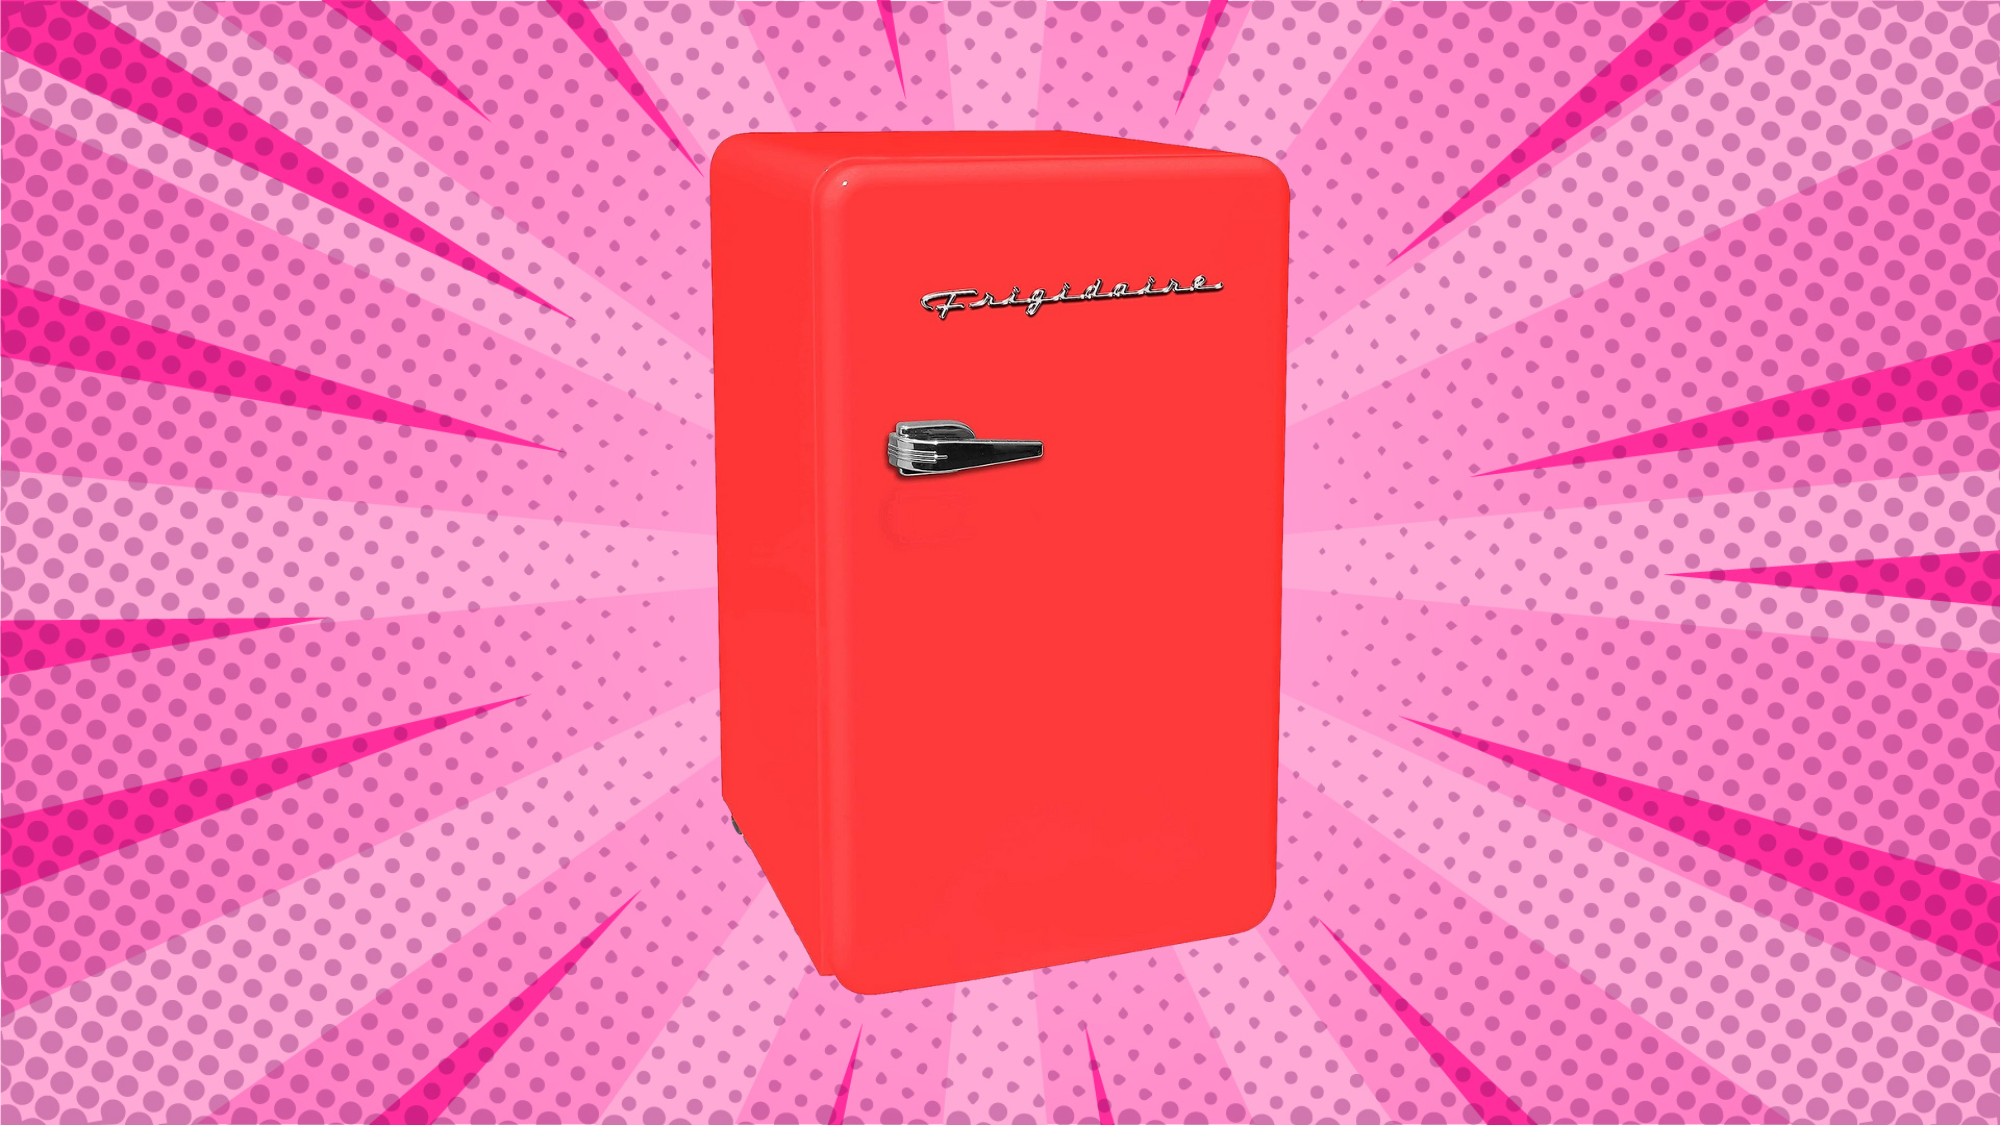 red retro mini fridge against a pink background 